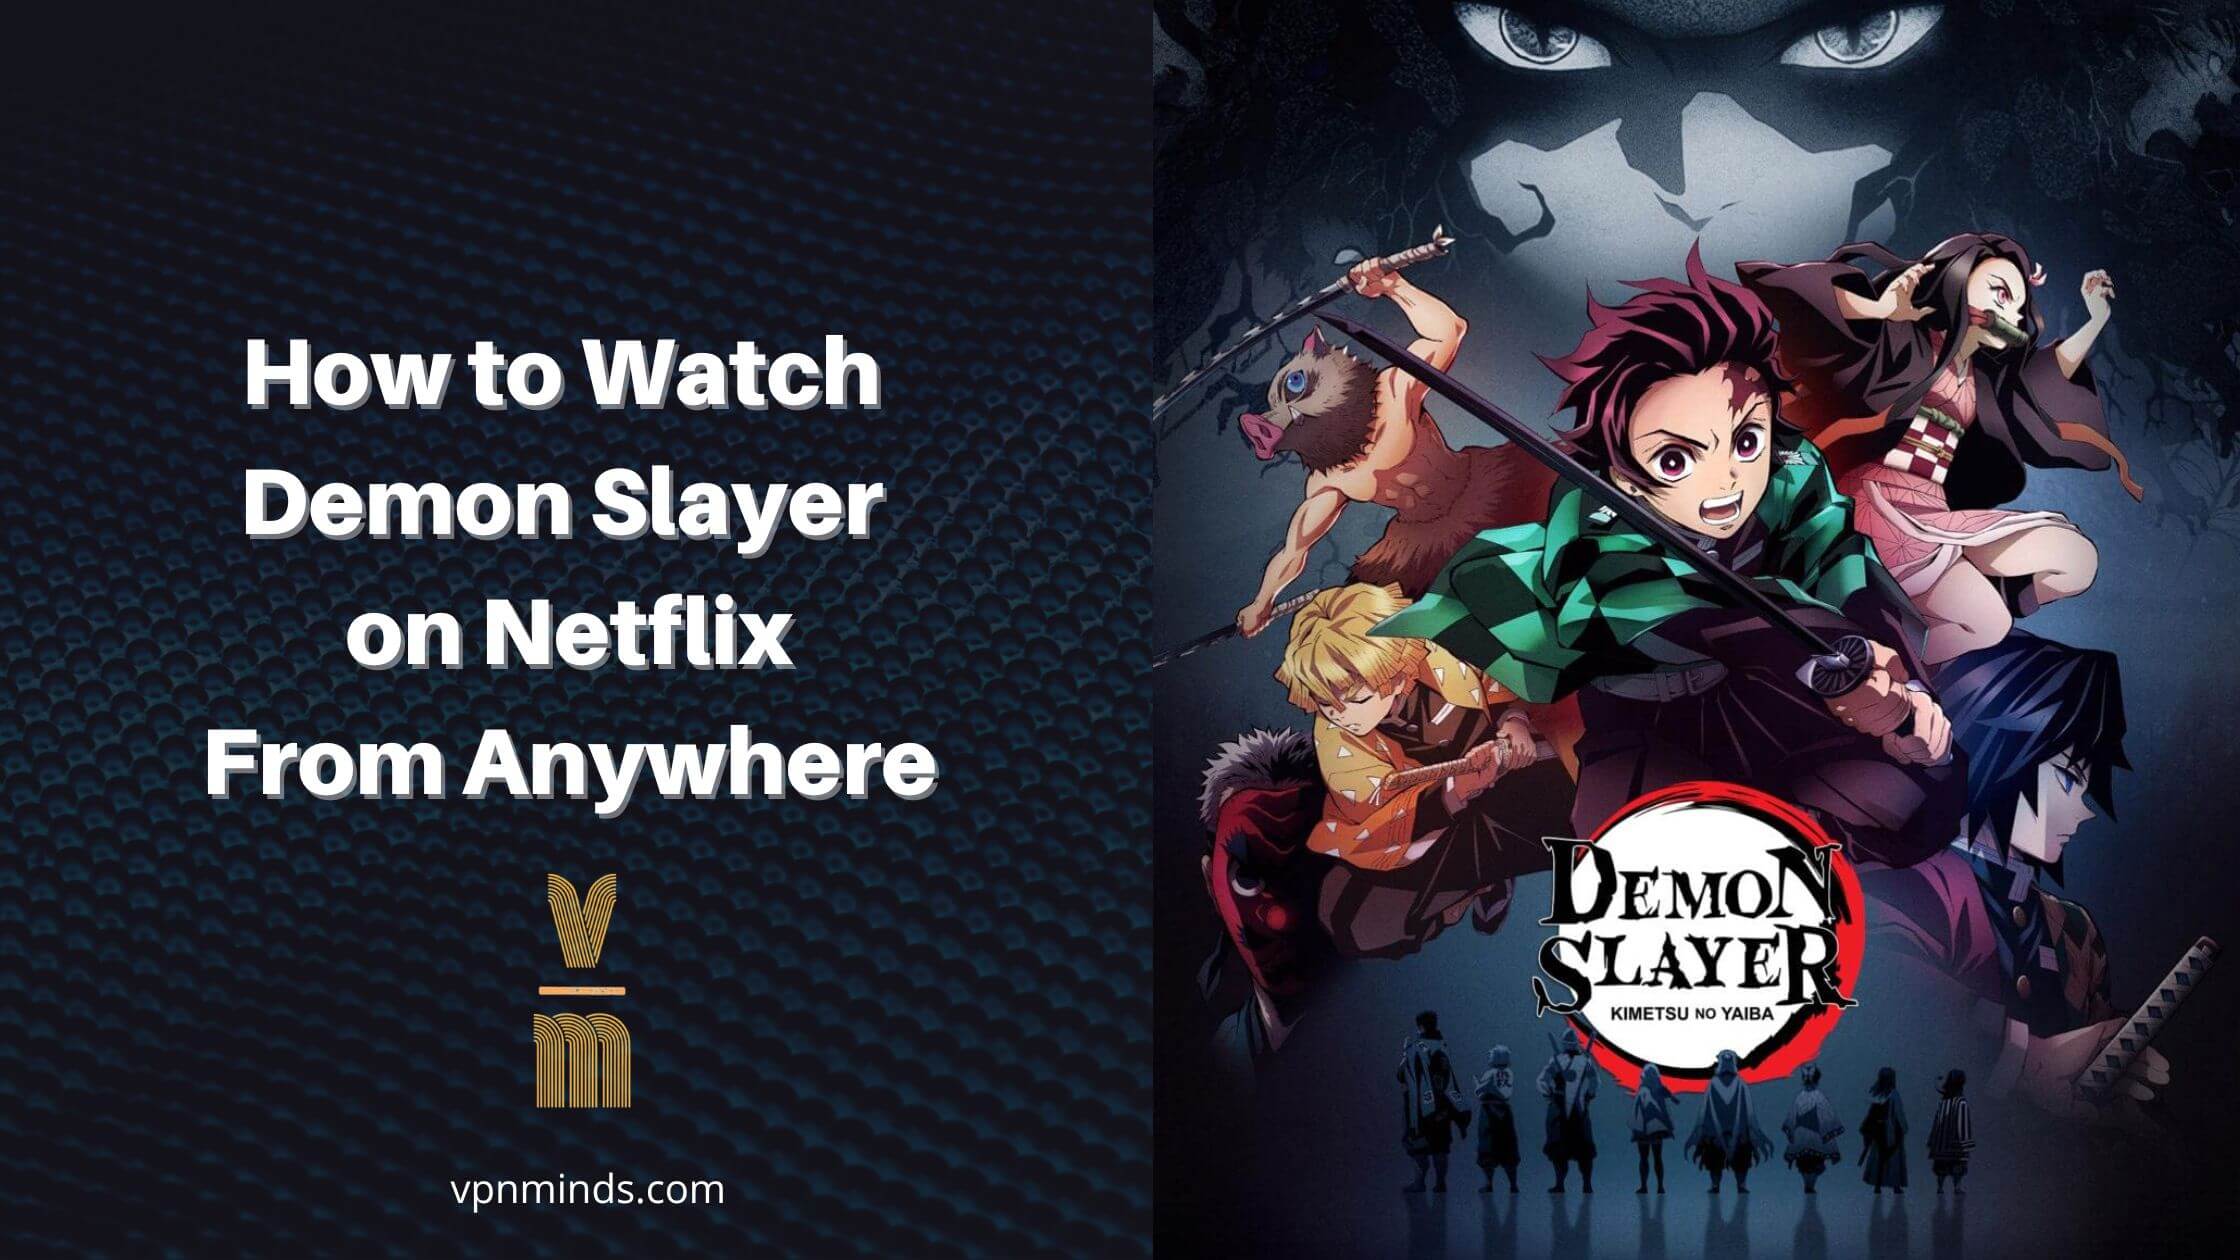 How to watch demon slayer on Netflix